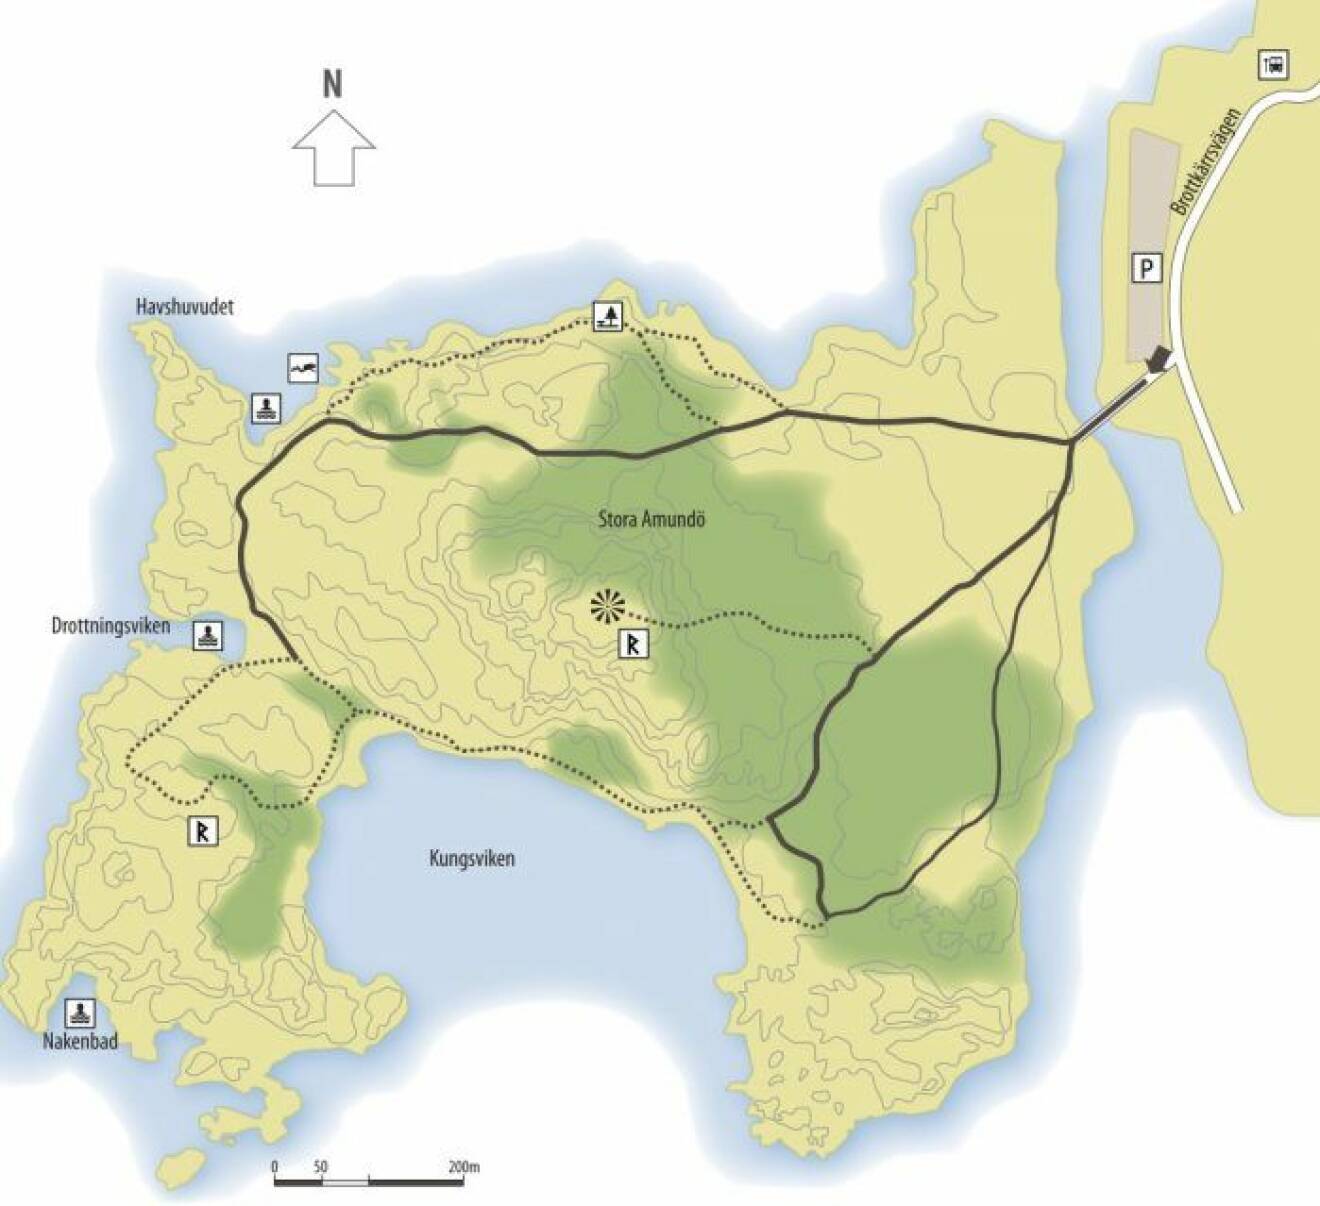 Stora Amundö